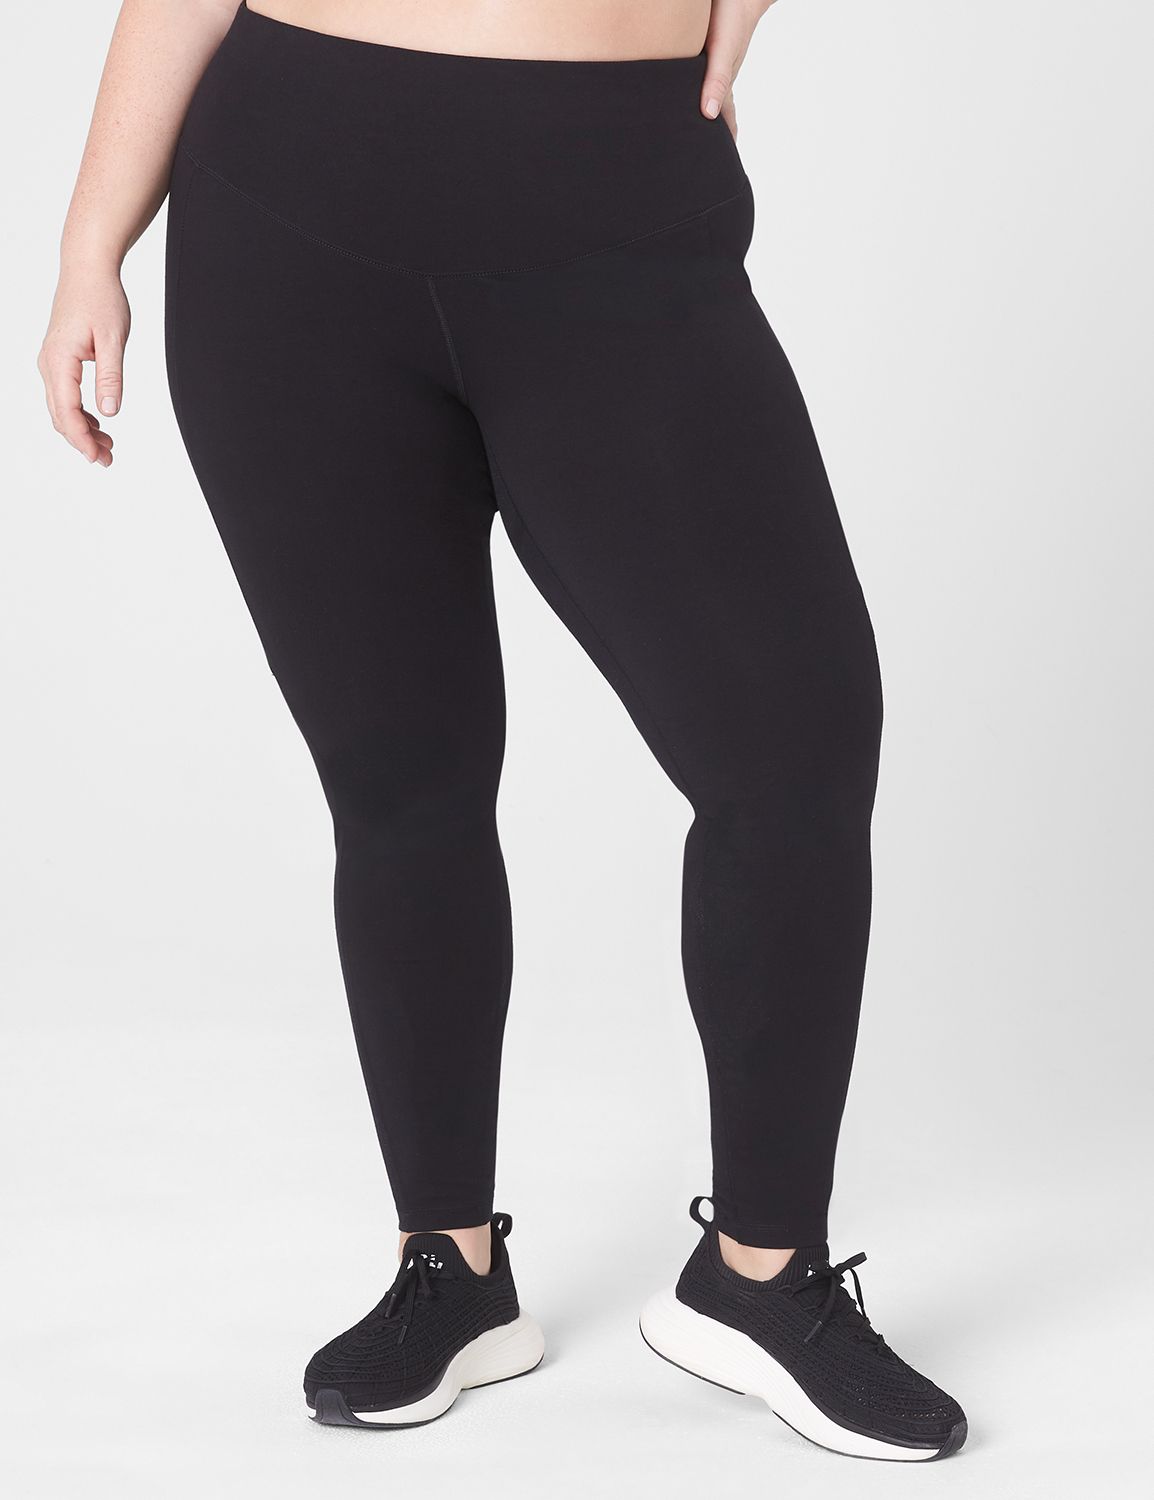 SPANX, Pants & Jumpsuits, Spanx Plus Size Look At Me Now Tummy Control  Leggings Black 3x